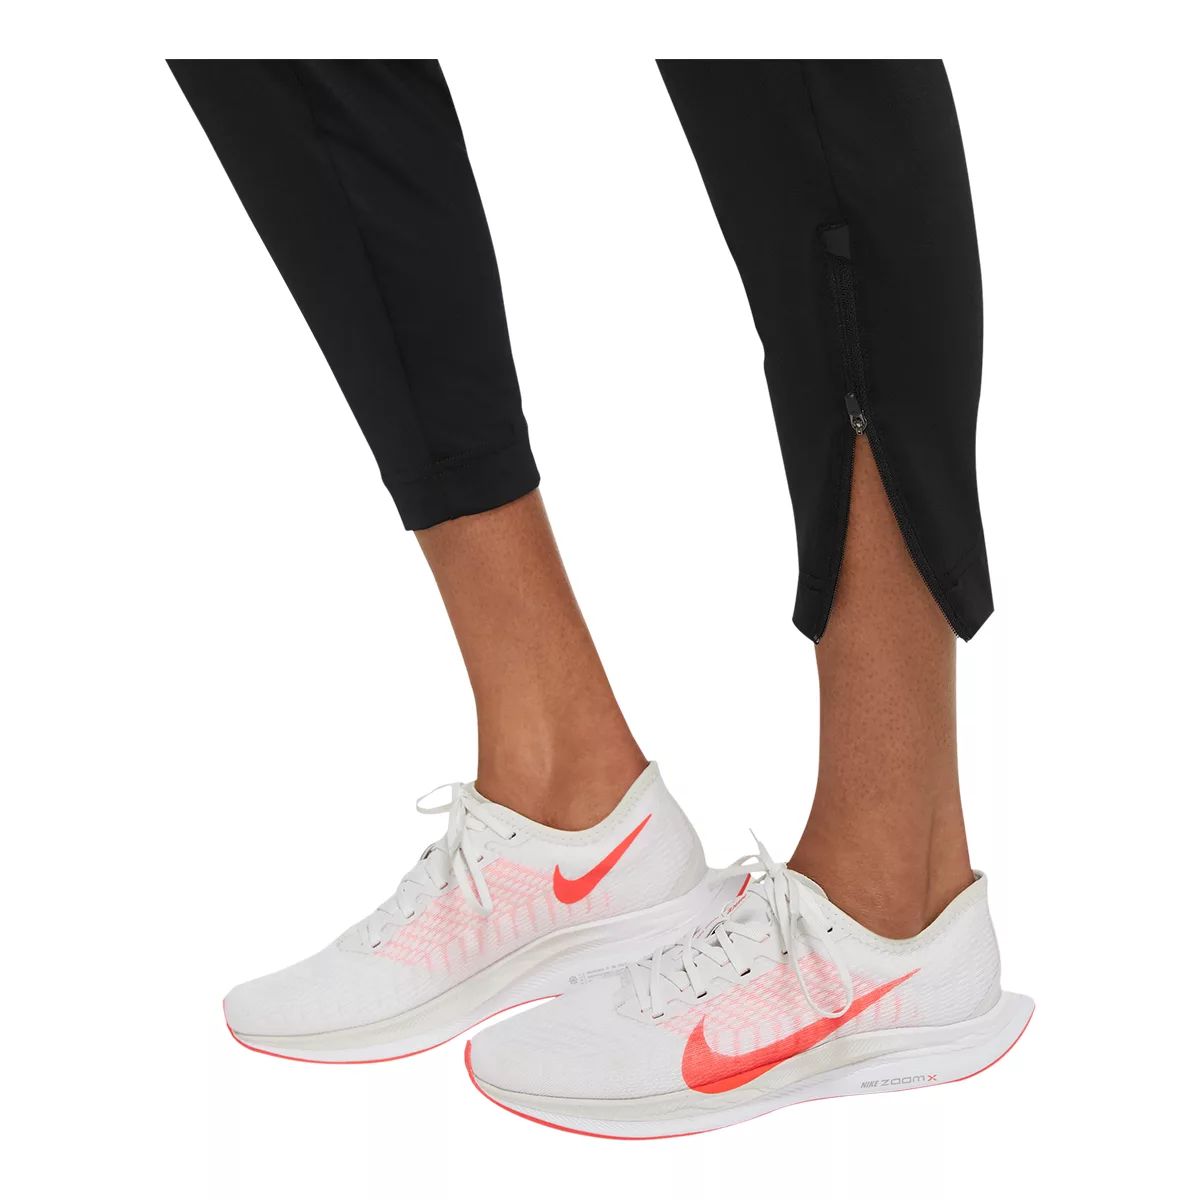 Nike Dri Fit Flat Zip Front Athletic Pants Womens (XL) (16-18) Black P2